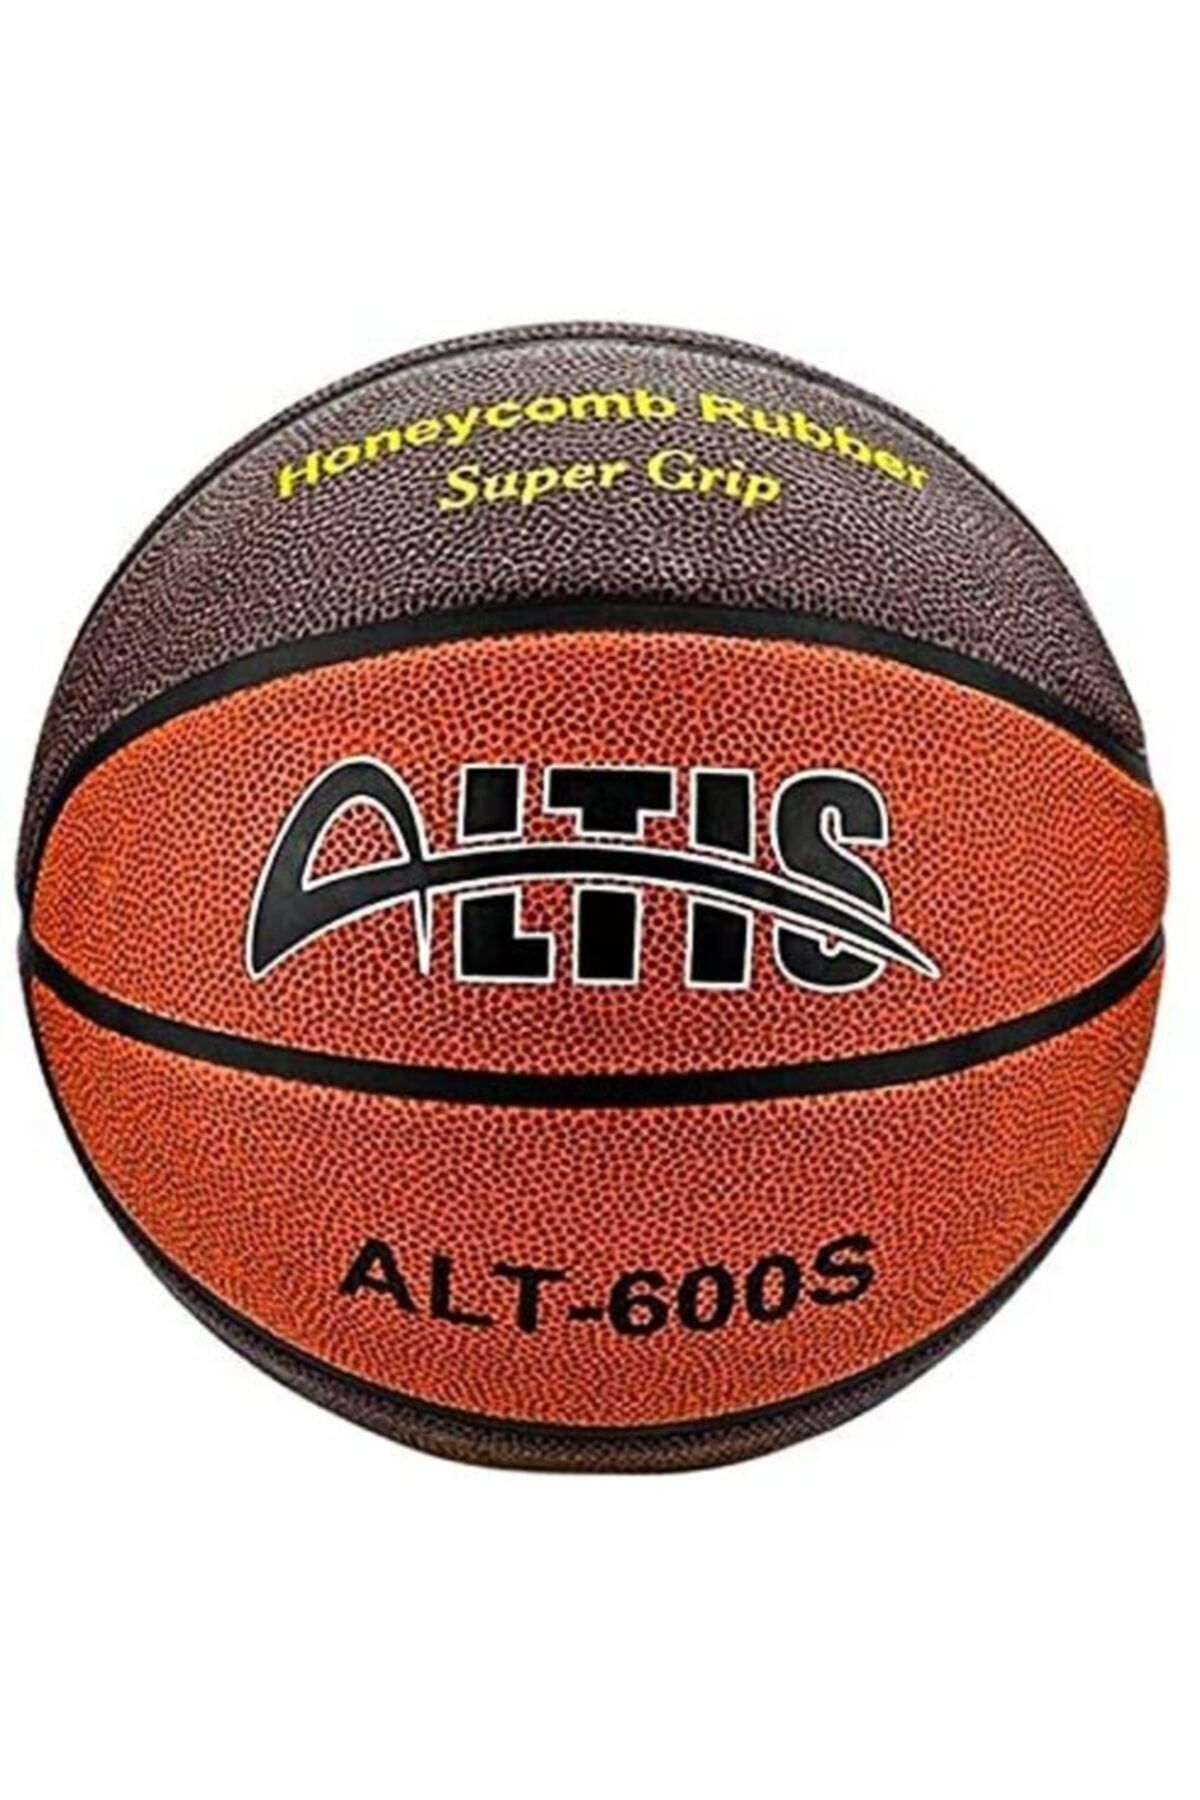 ALTIS Alt-600s Super Grip Basketbol Topu - Basket Topu - 6 No